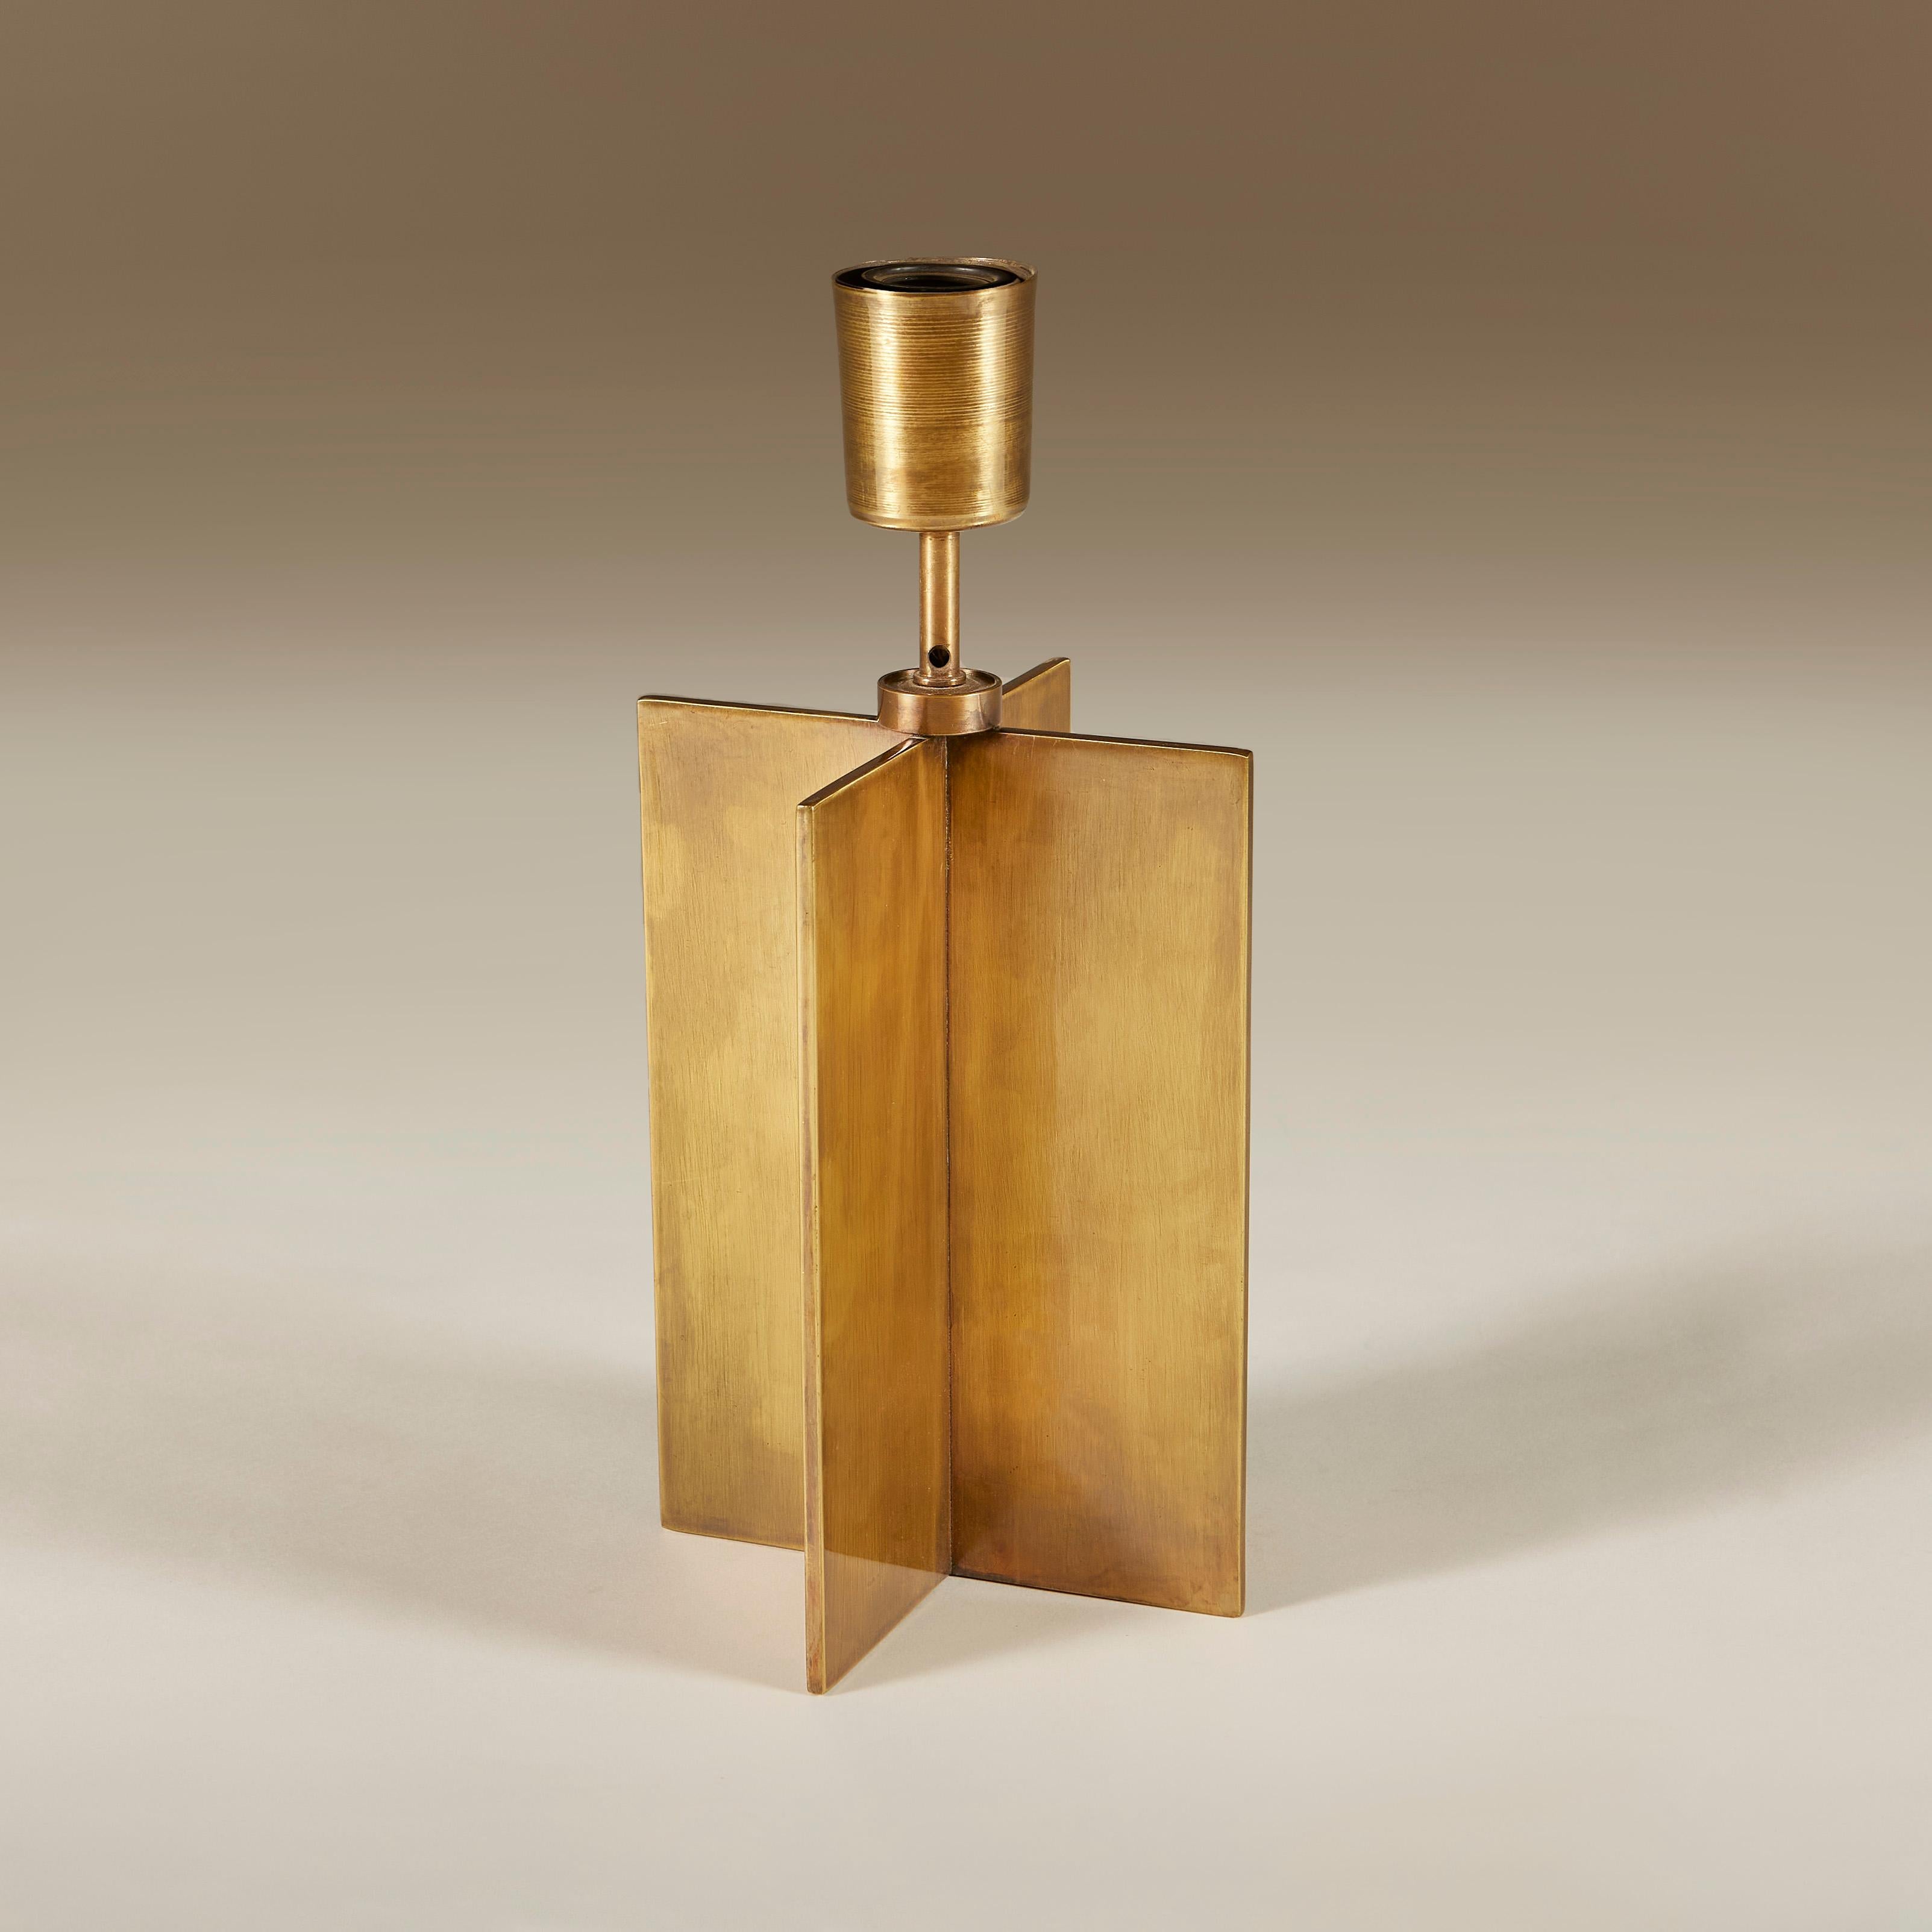 Pair of Original Jean-Michel Frank “Croisillon” Bronze Table Lamps, circa 1935 For Sale 2